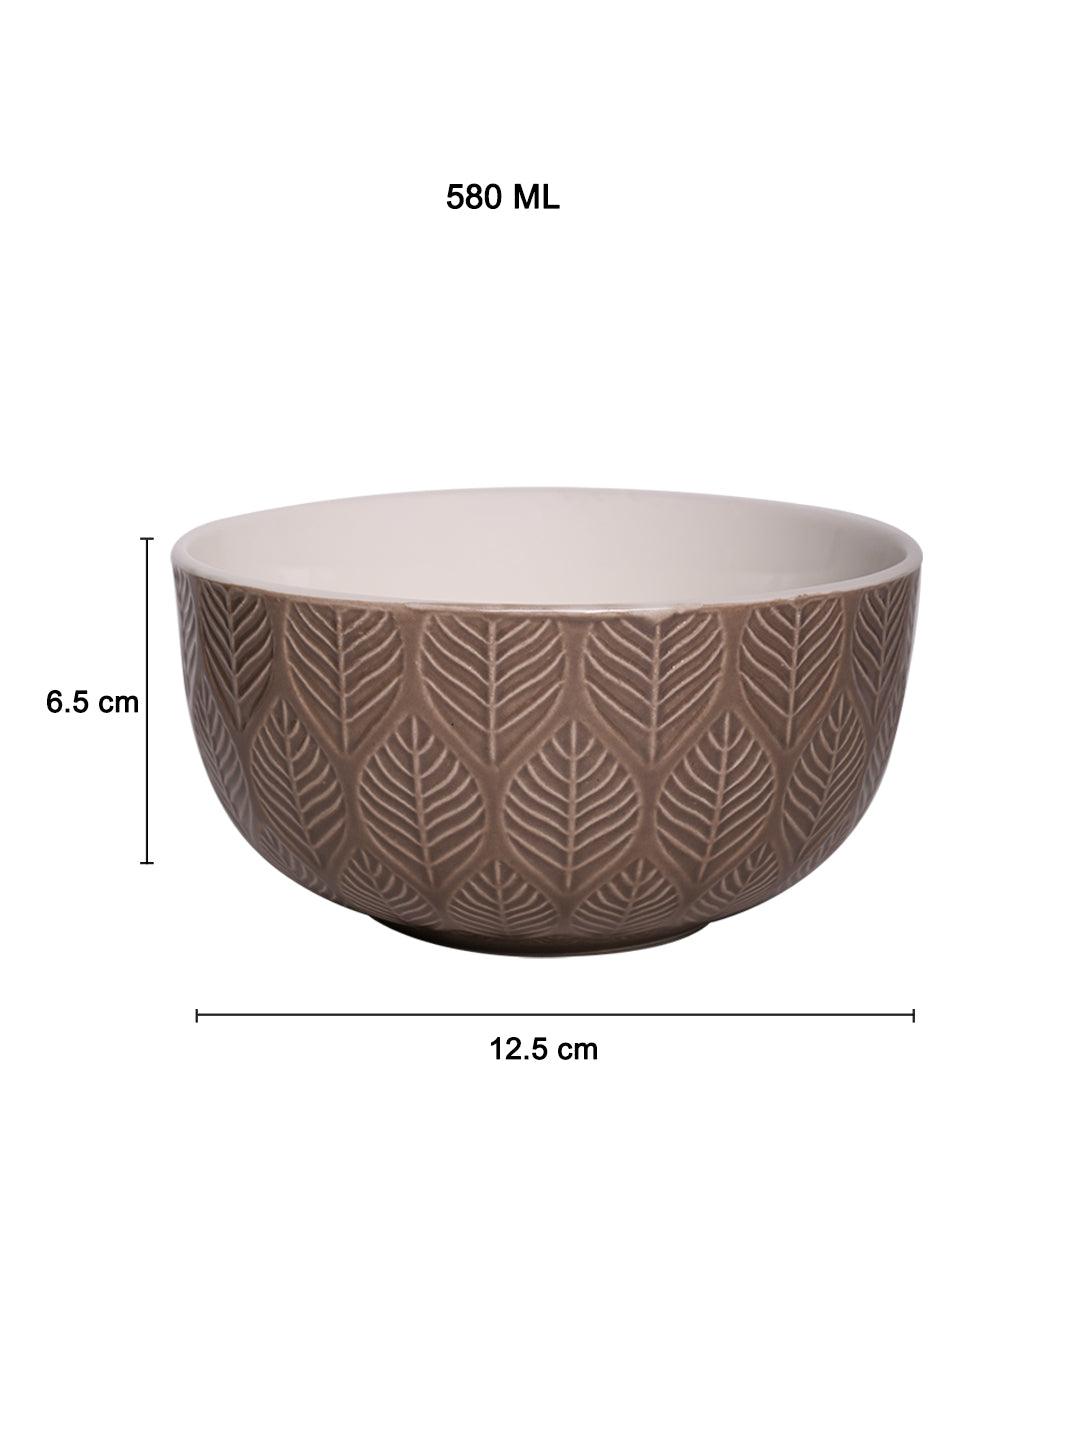 Beige Ceramic Bowl - 580Ml, Leaf Pattern - MARKET 99